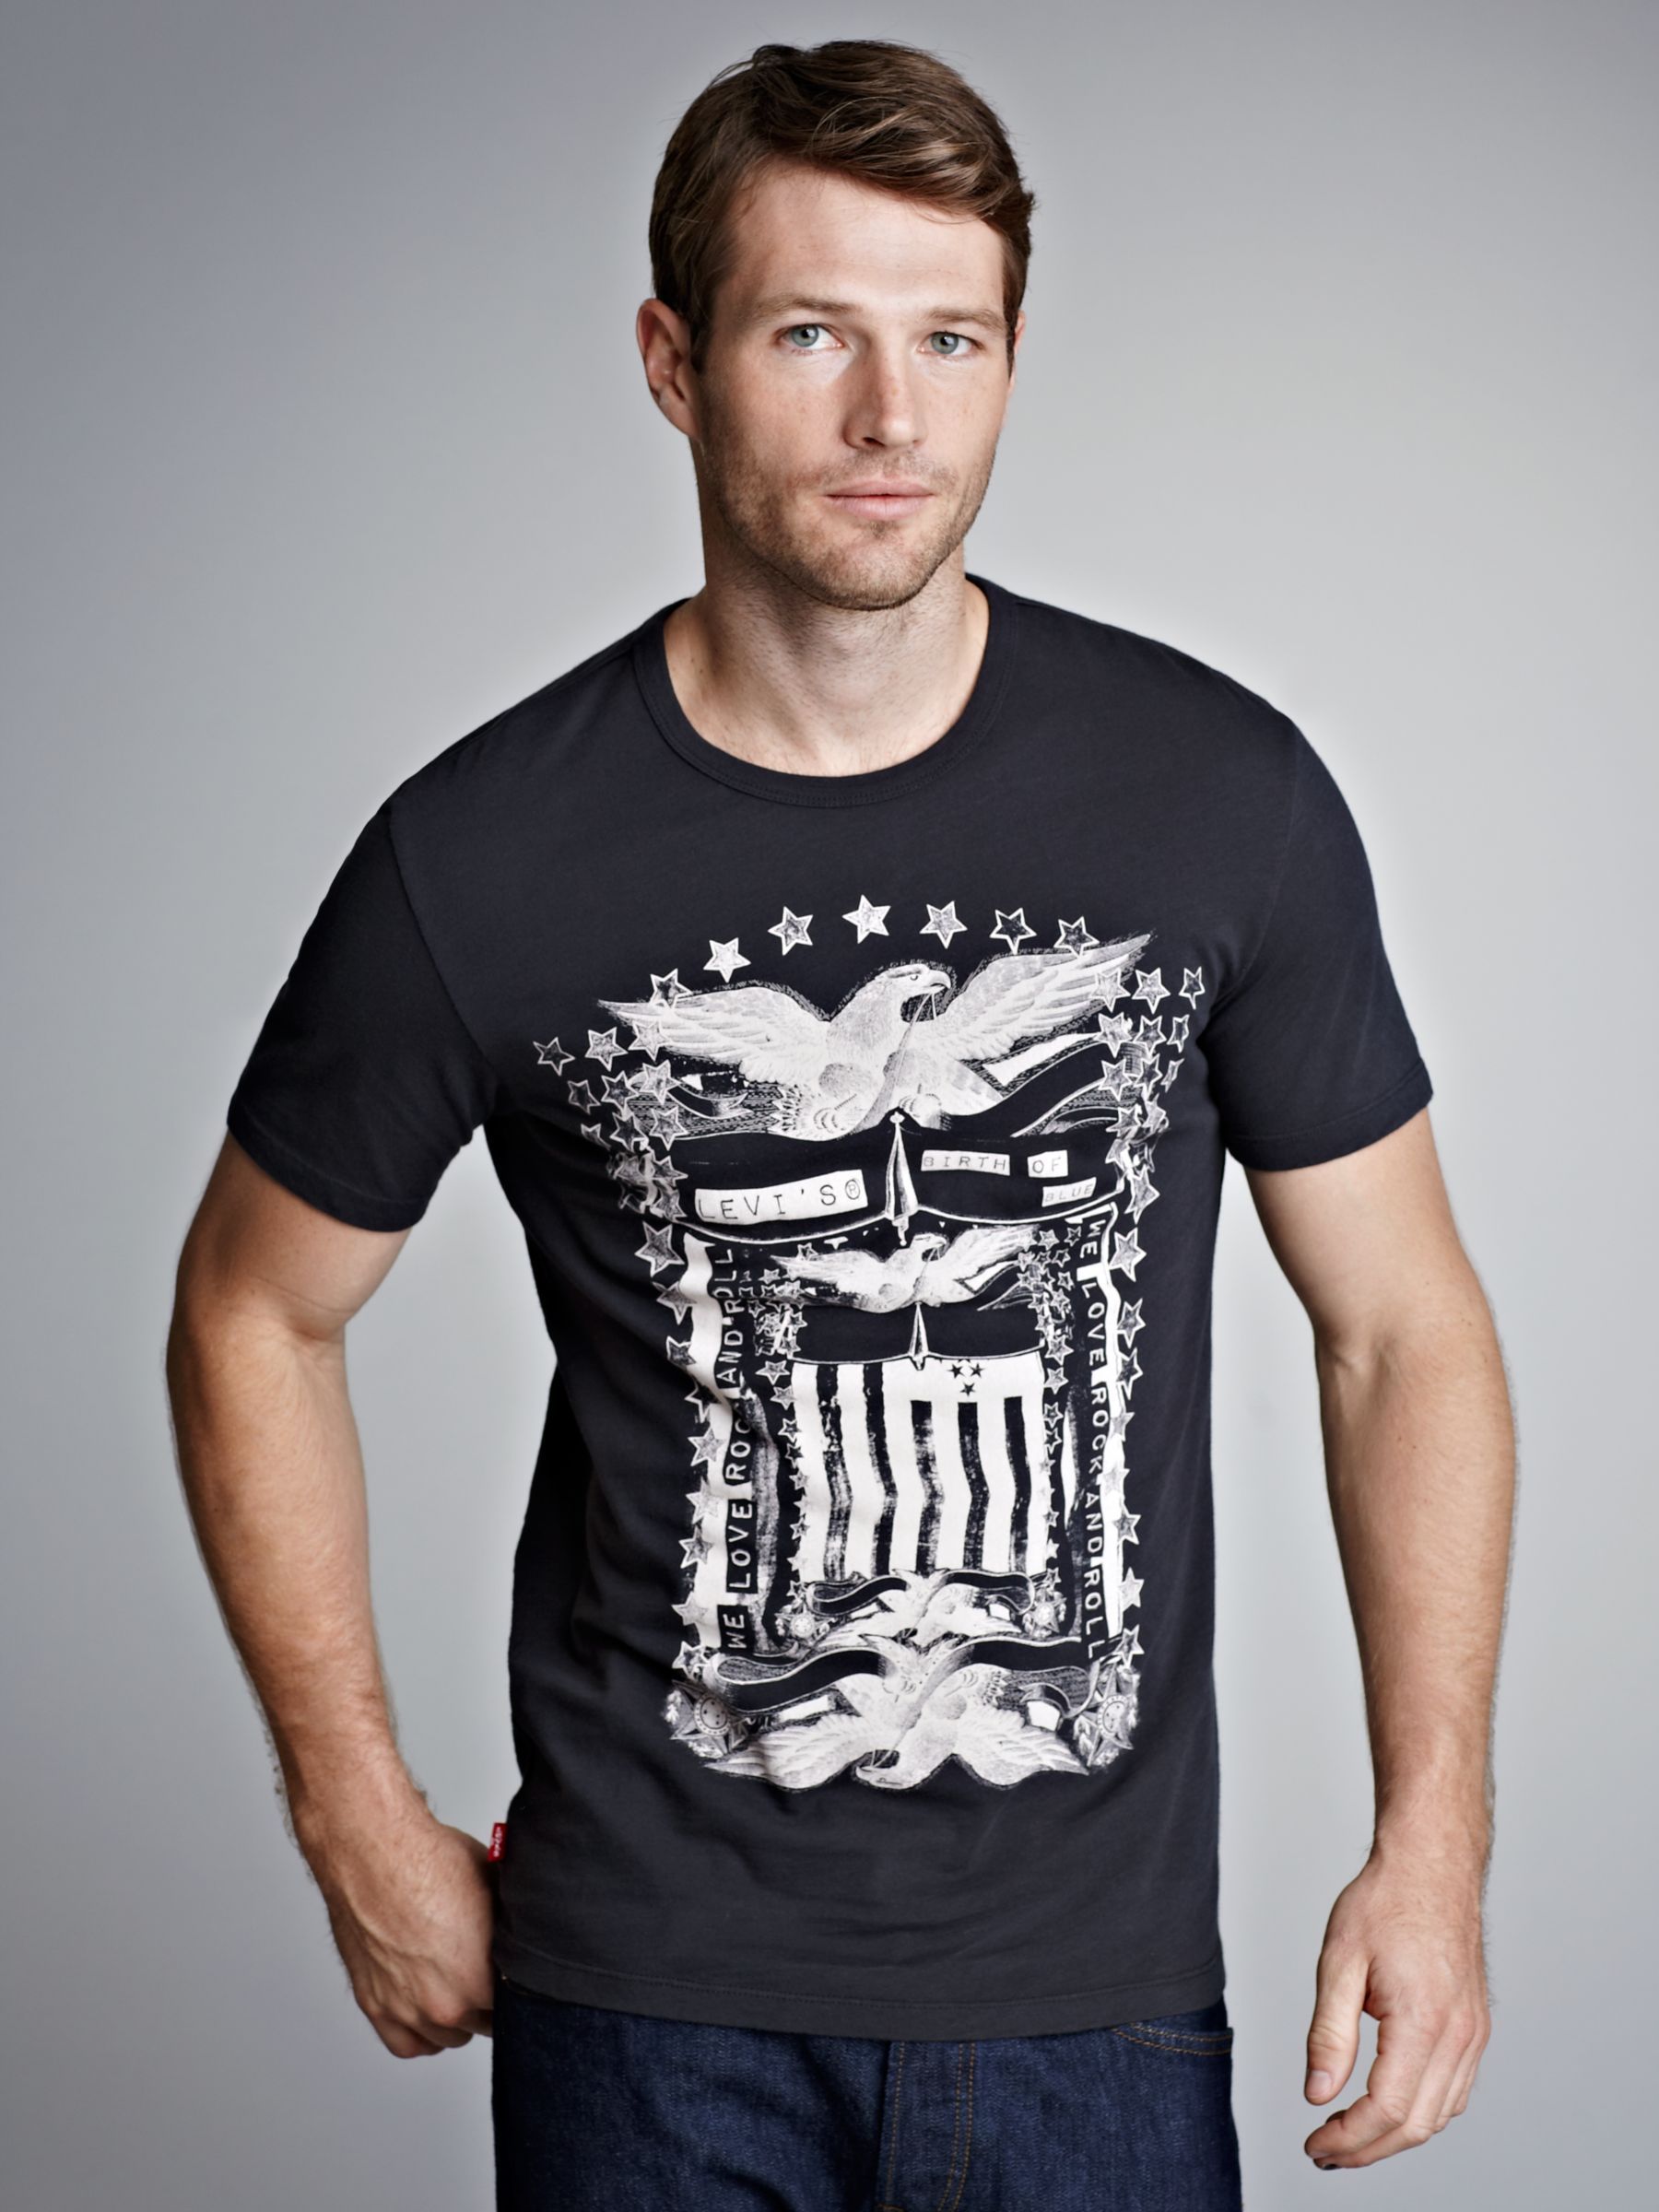 Eagle Rock Print T-Shirt, Coal